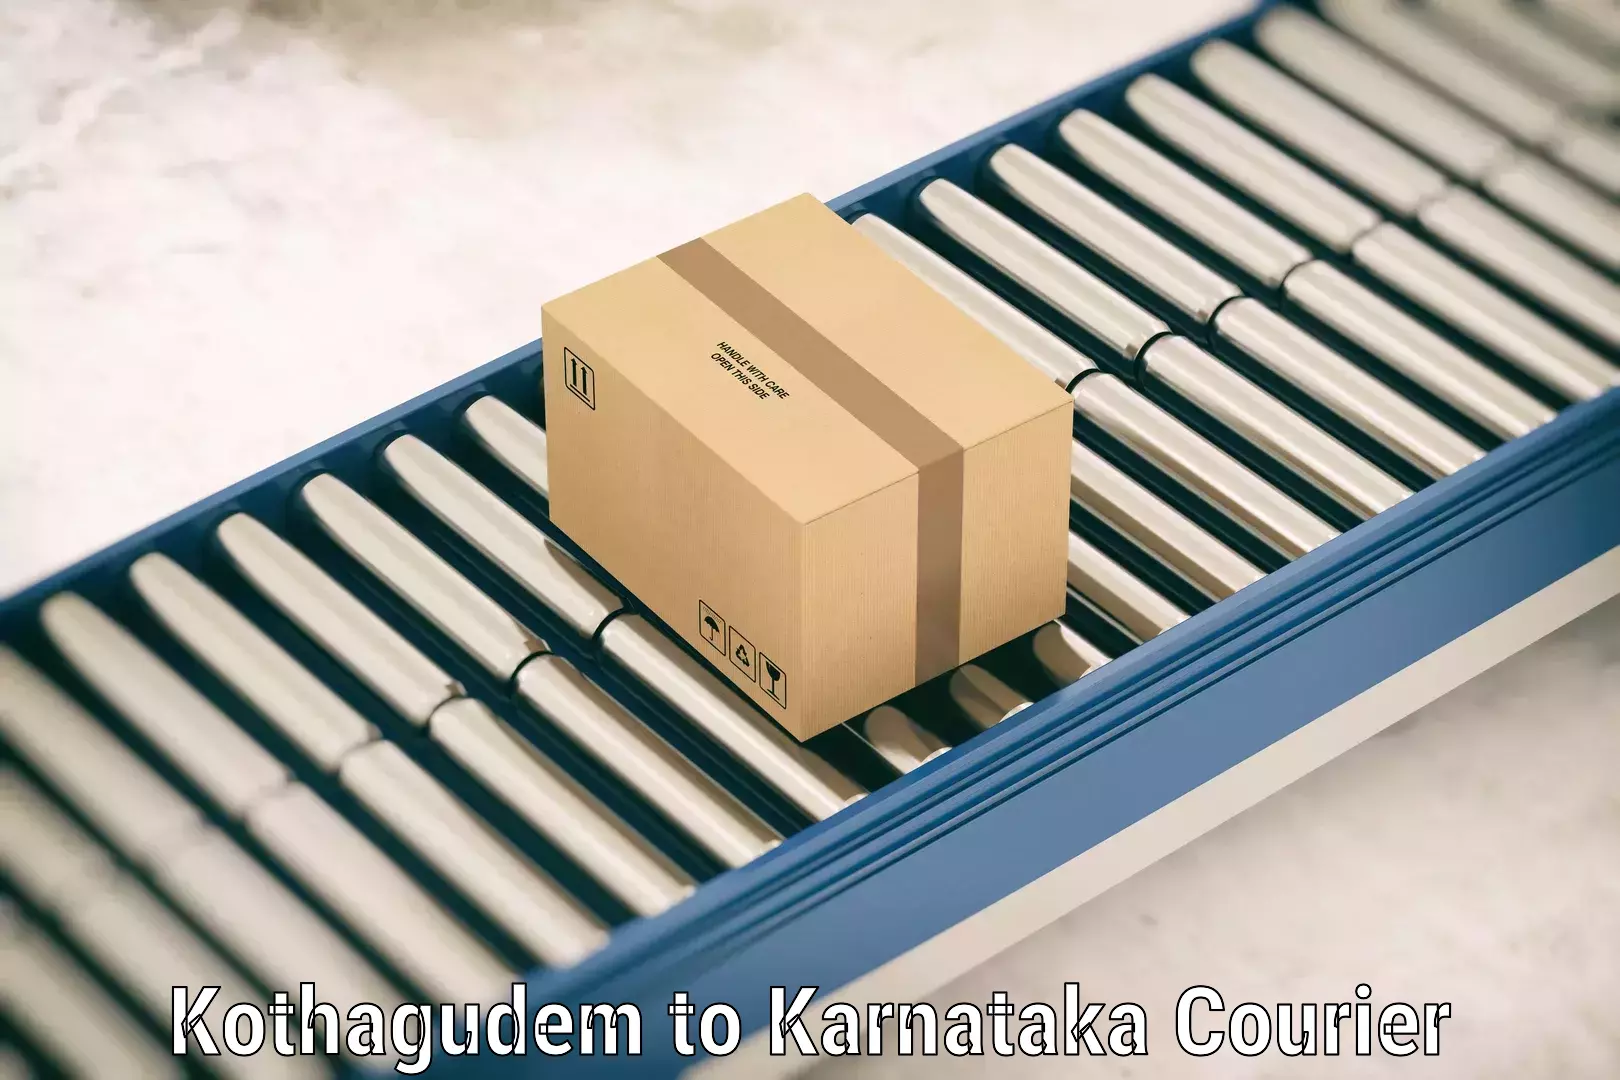 Luggage shipment specialists Kothagudem to Gonikoppal